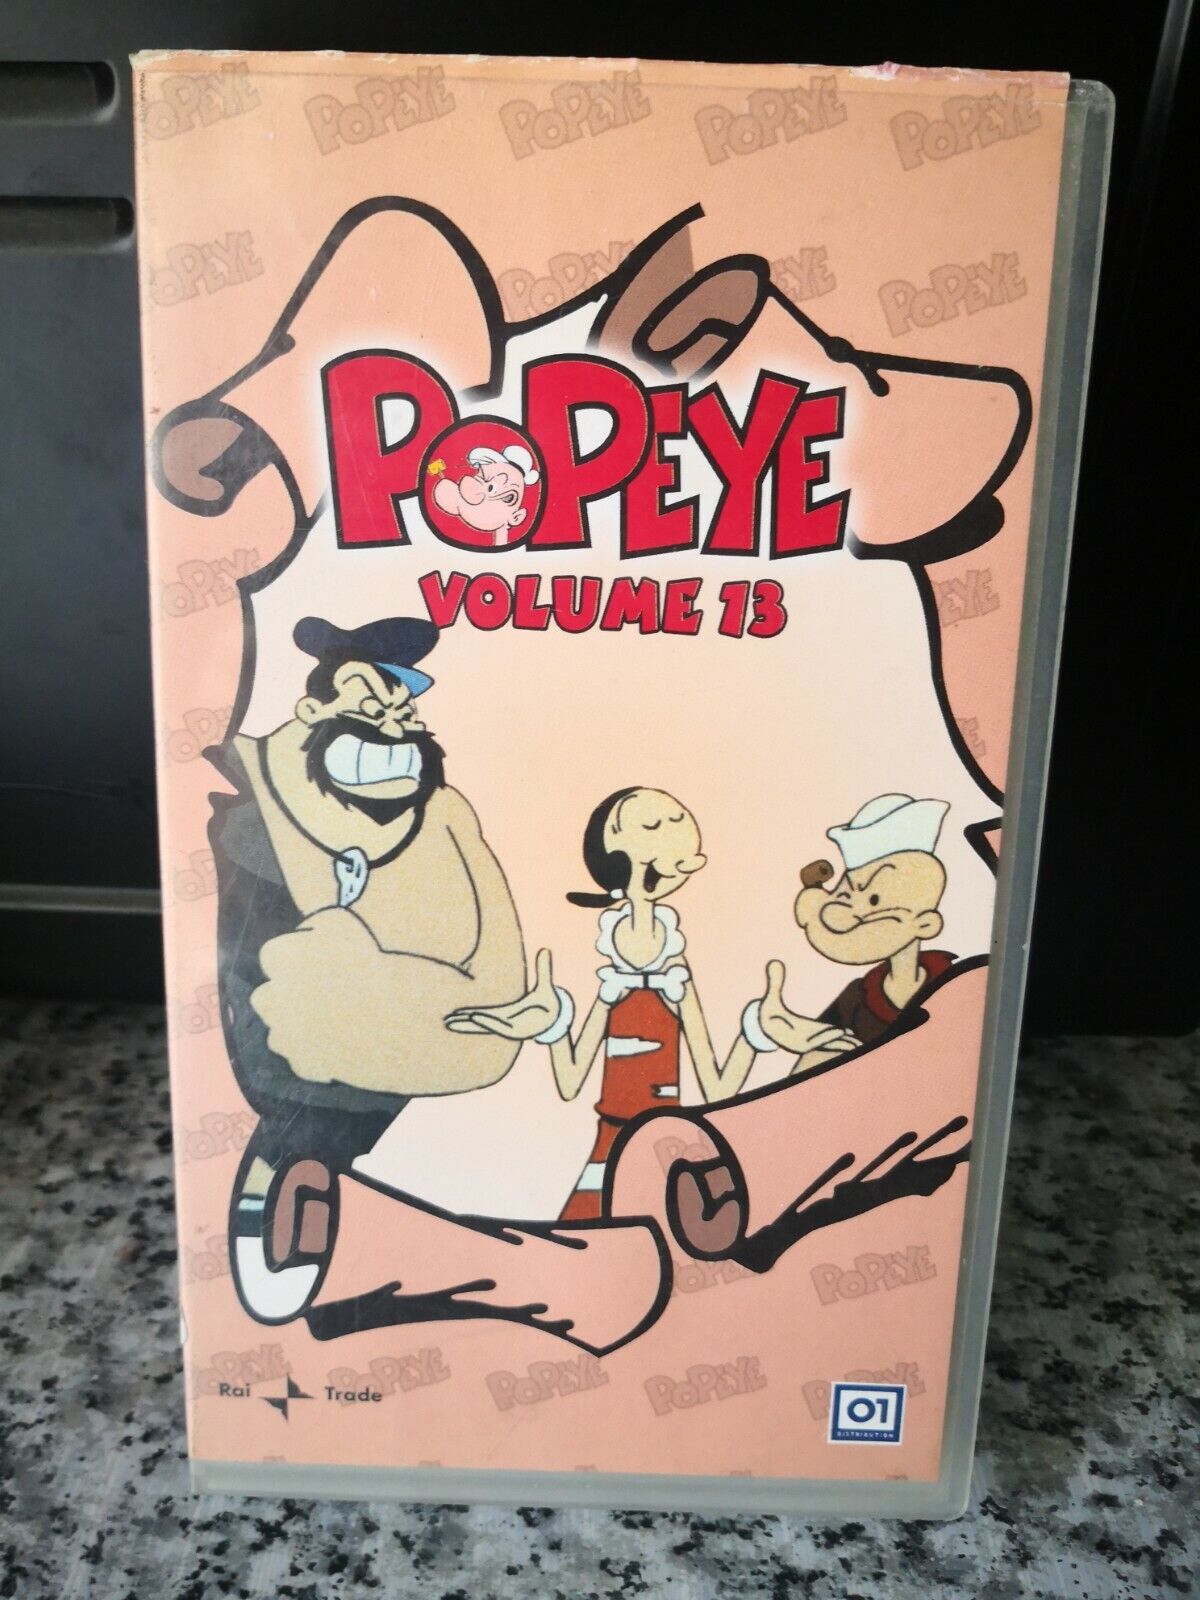 Popeye vol 13 - vhs -2005 - rai trade - F vhs usato